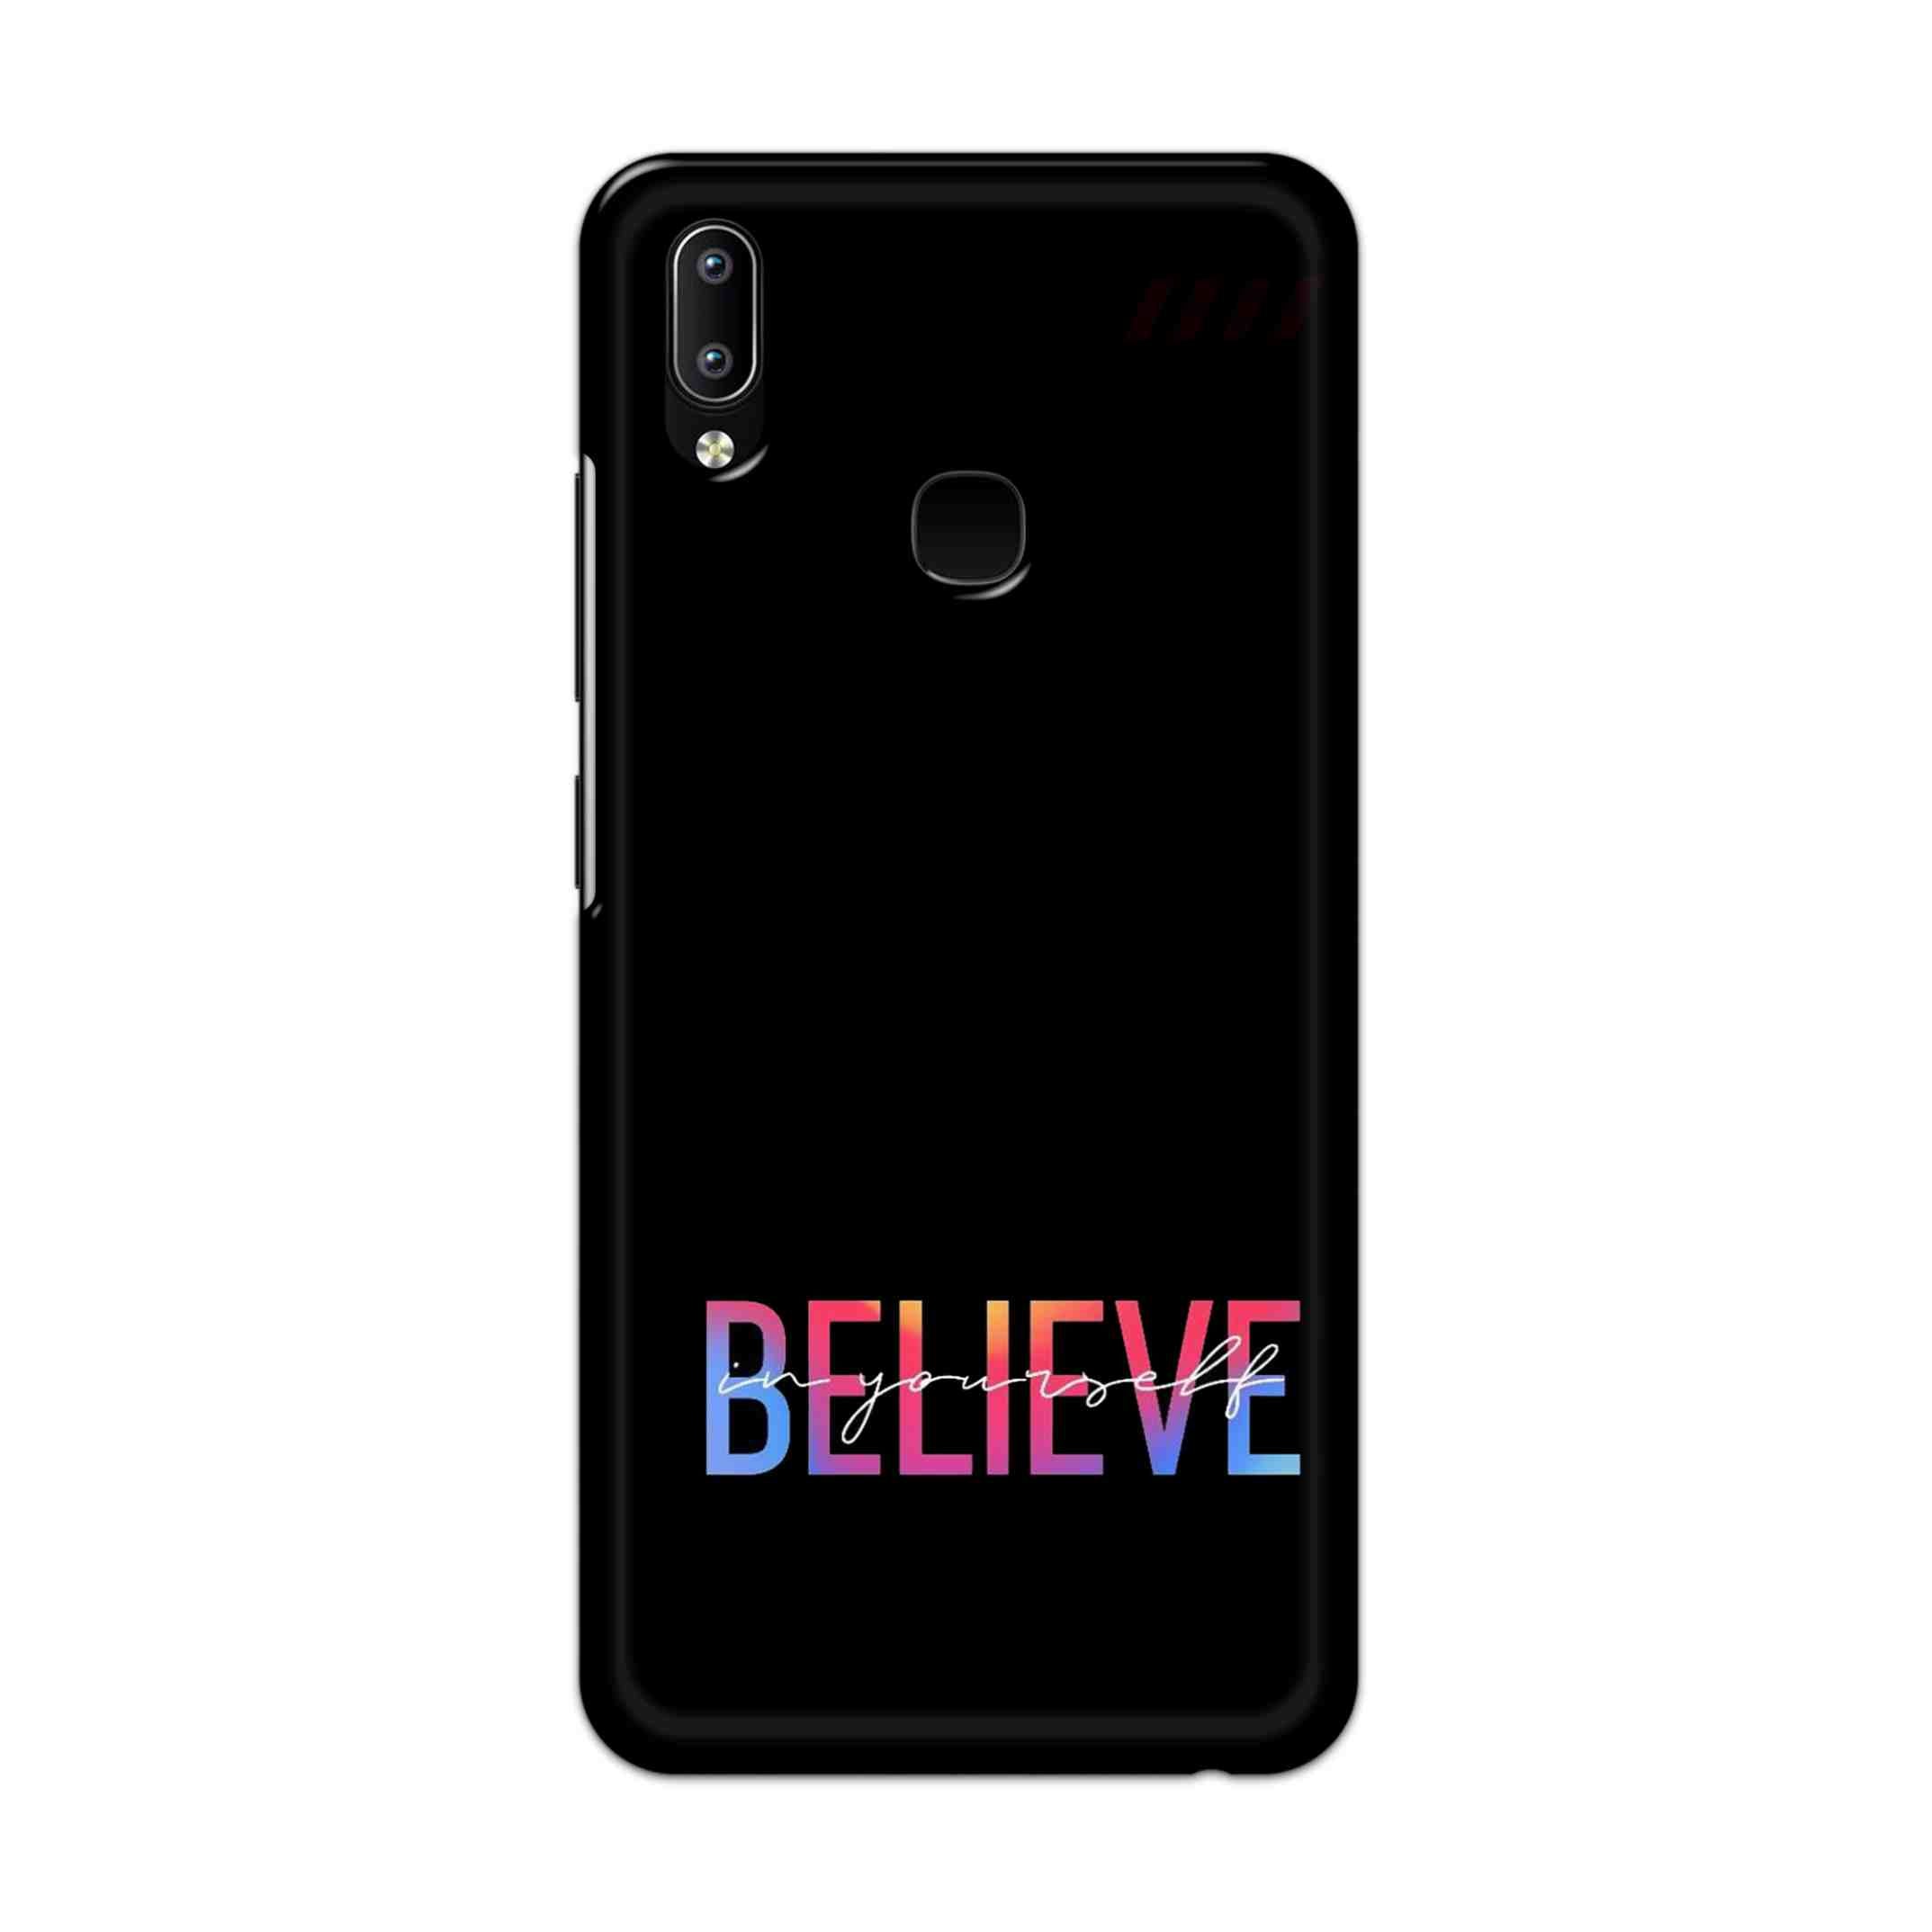 Buy Believe Hard Back Mobile Phone Case Cover For Vivo Y95 / Y93 / Y91 Online